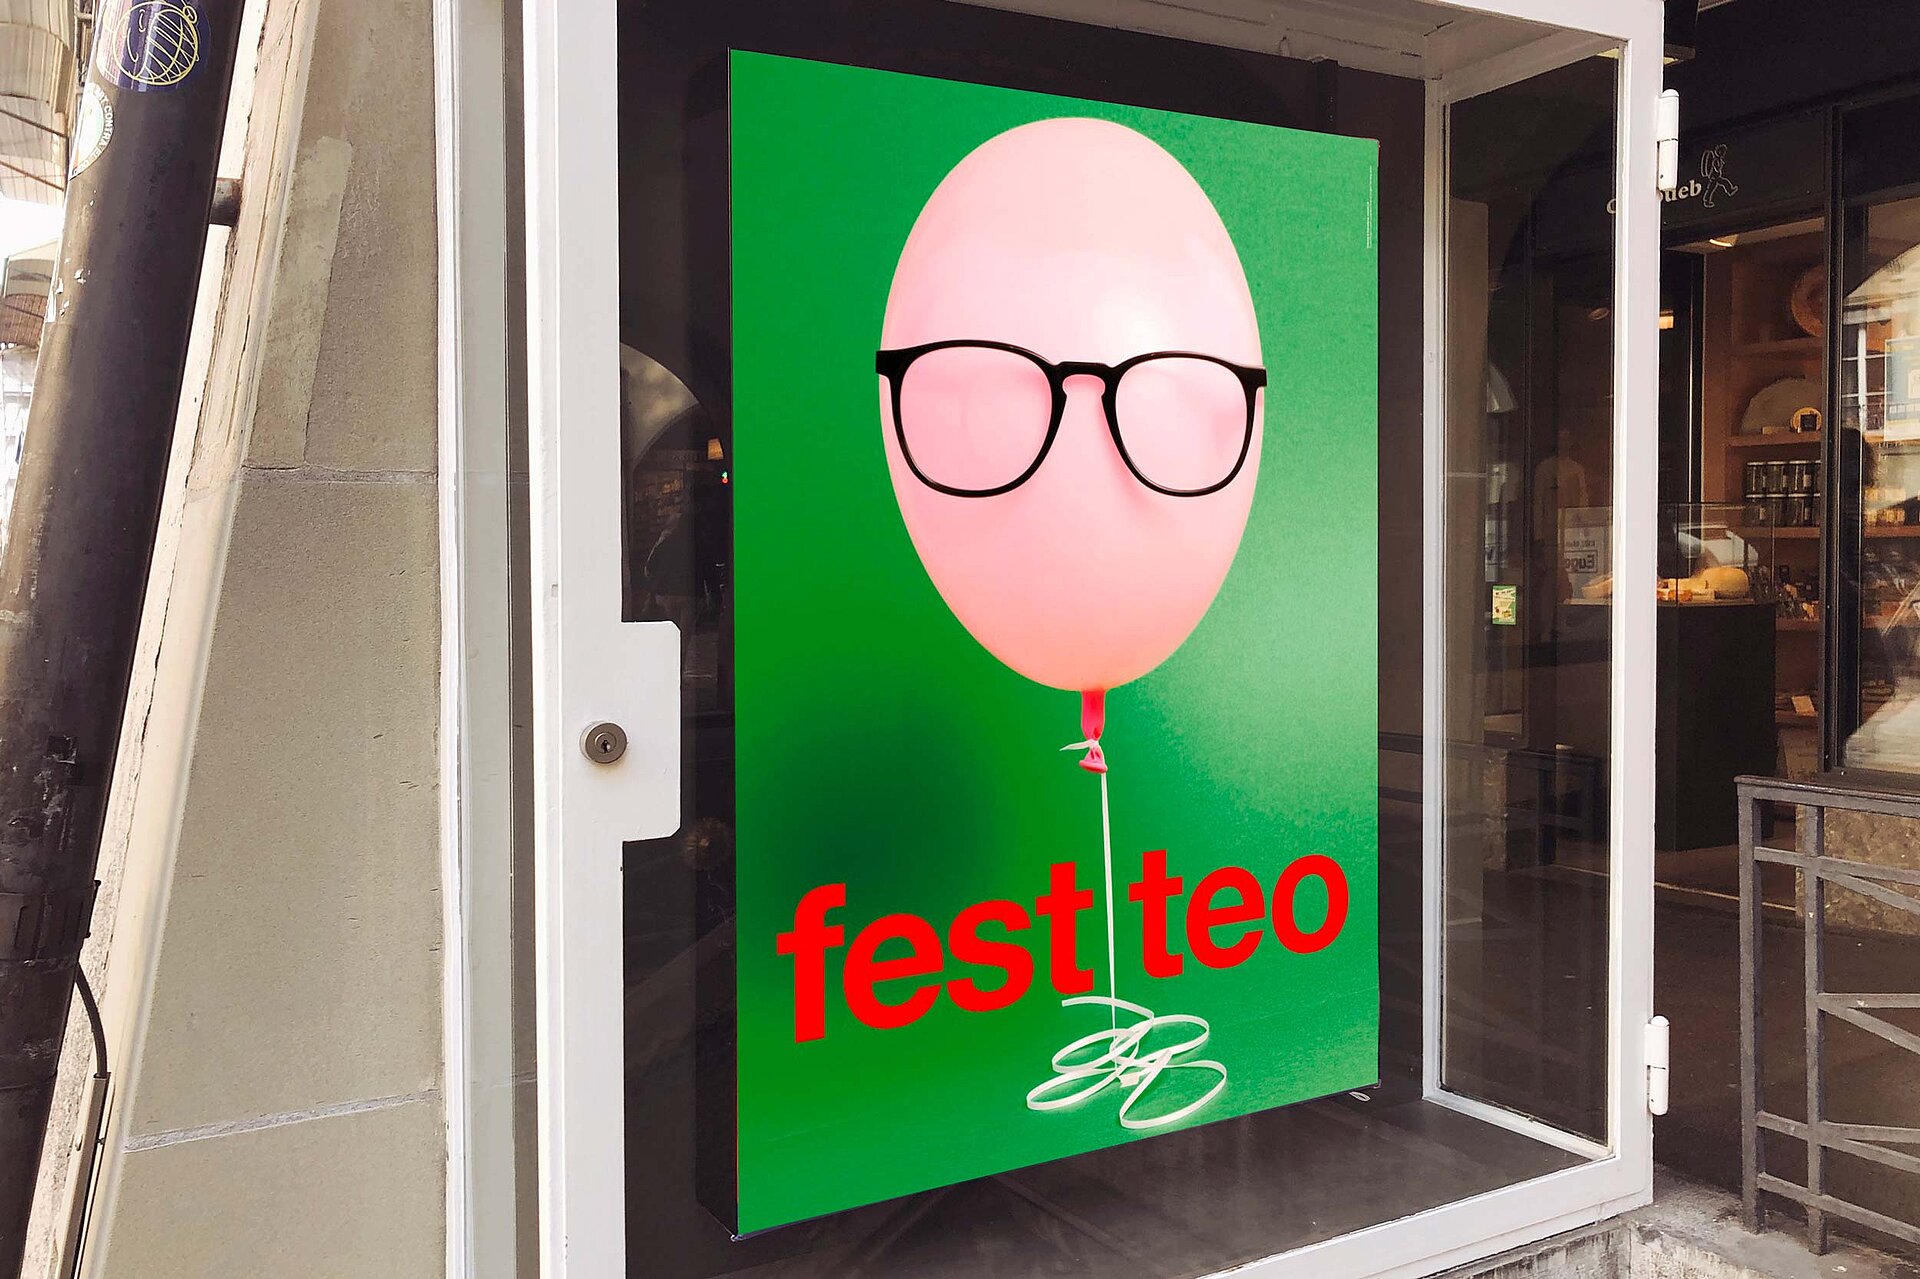 poster tj Green ballon with glasses advertising bern